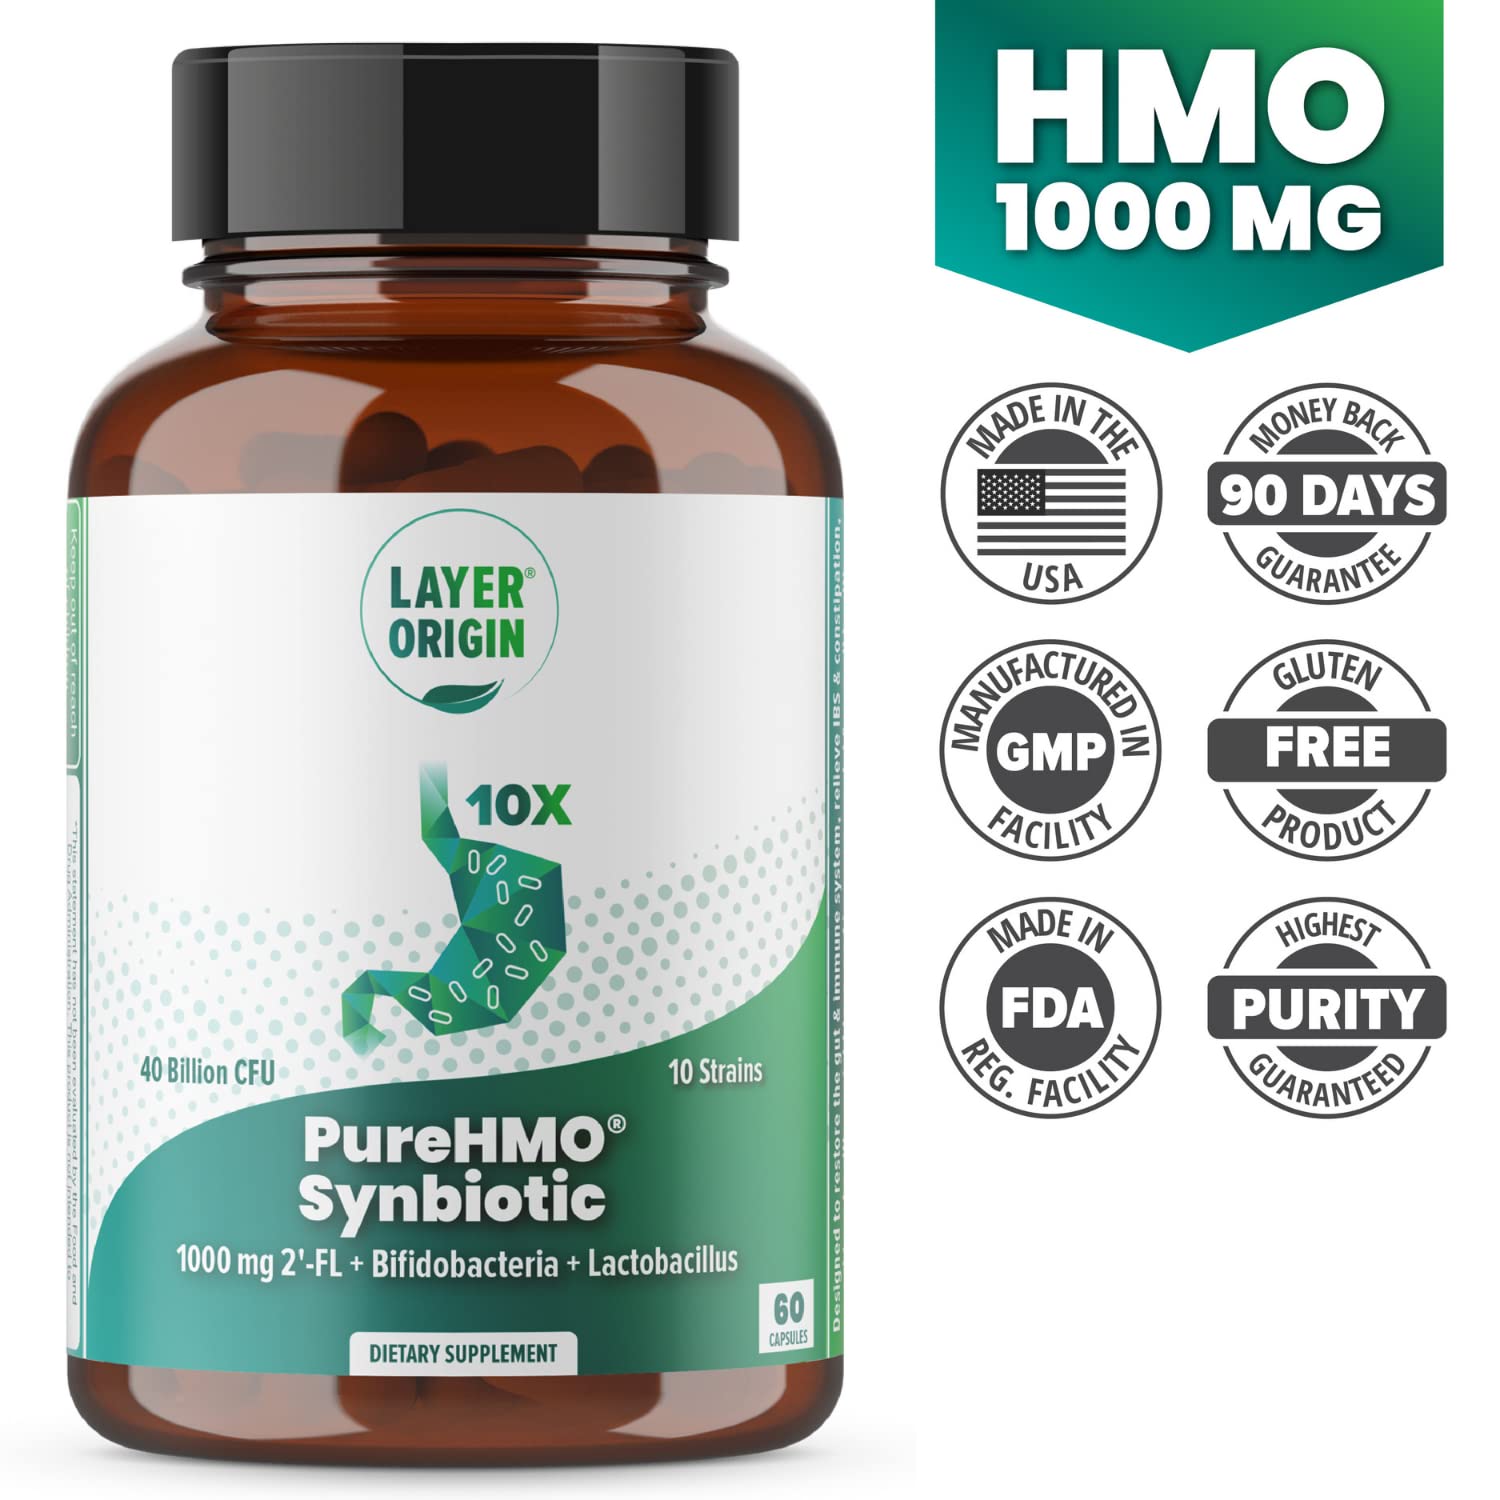 Layer Origin | PureHMO Synbiotic, Super Prebiotic + Probiotic, 1000 mg of Human Milk Oligosaccharides Powder, 10 Strains, 40 Billion CFU Probiotic